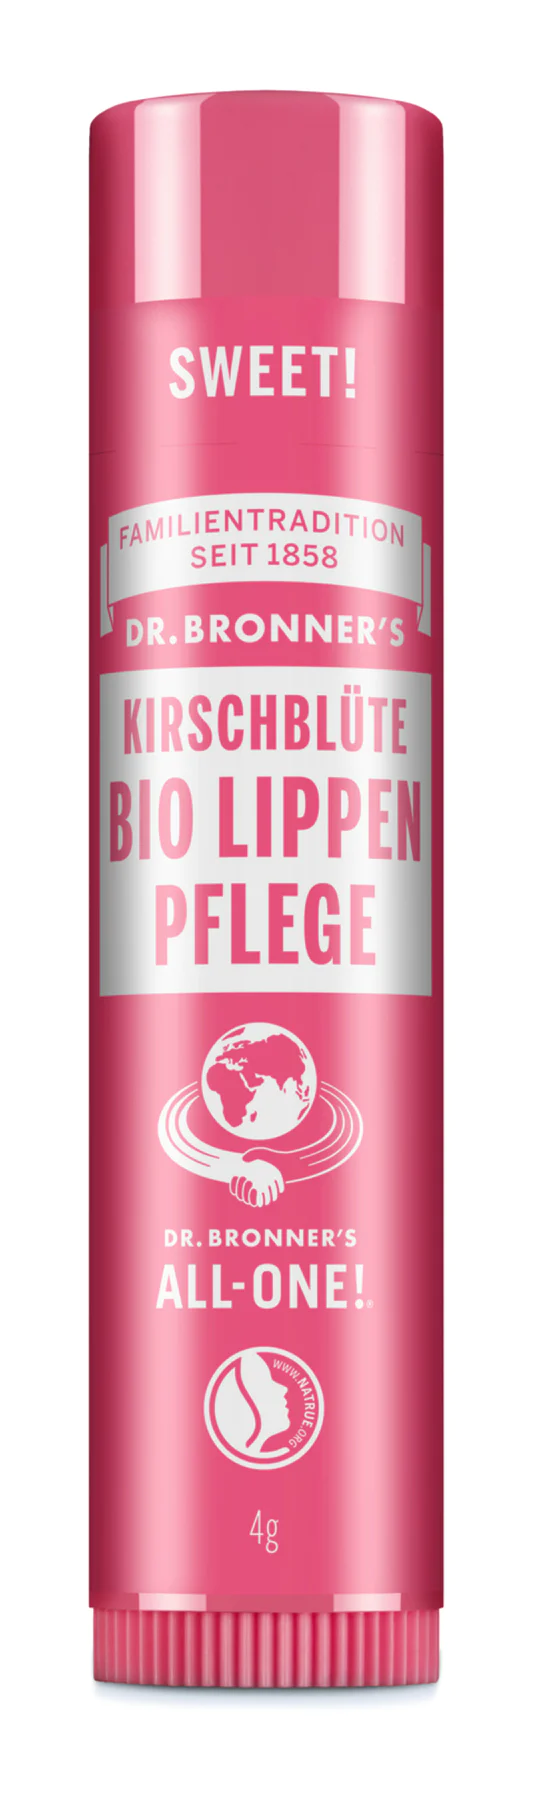 DR BRONNERS Bio Lippenpflege  KirschblÃ¼te